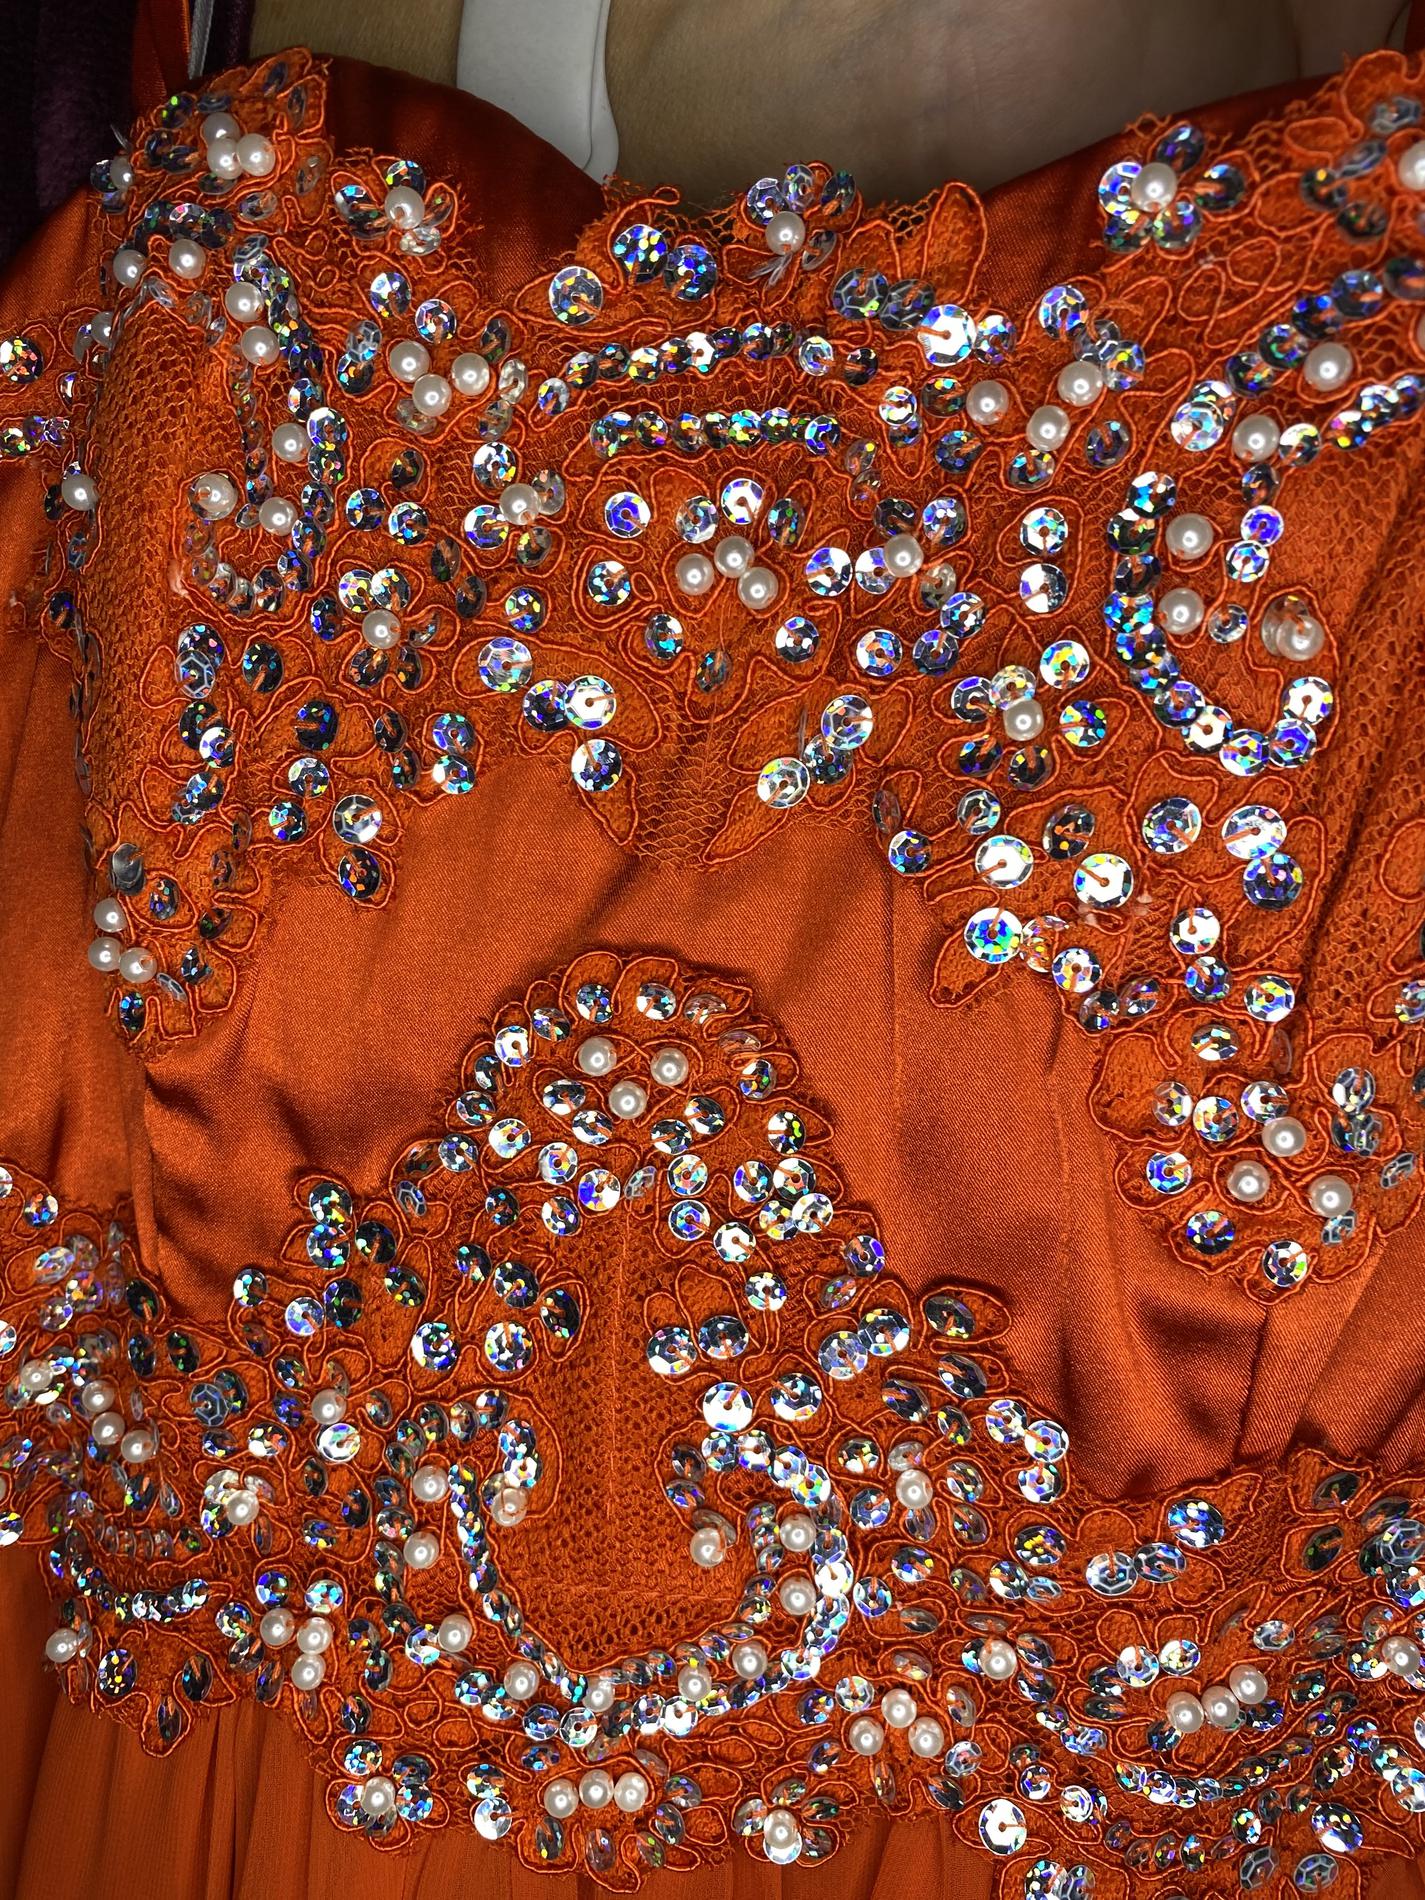 Nox Anabel Orange Size 8 70 Off Silk Tulle Side slit Dress on Queenly